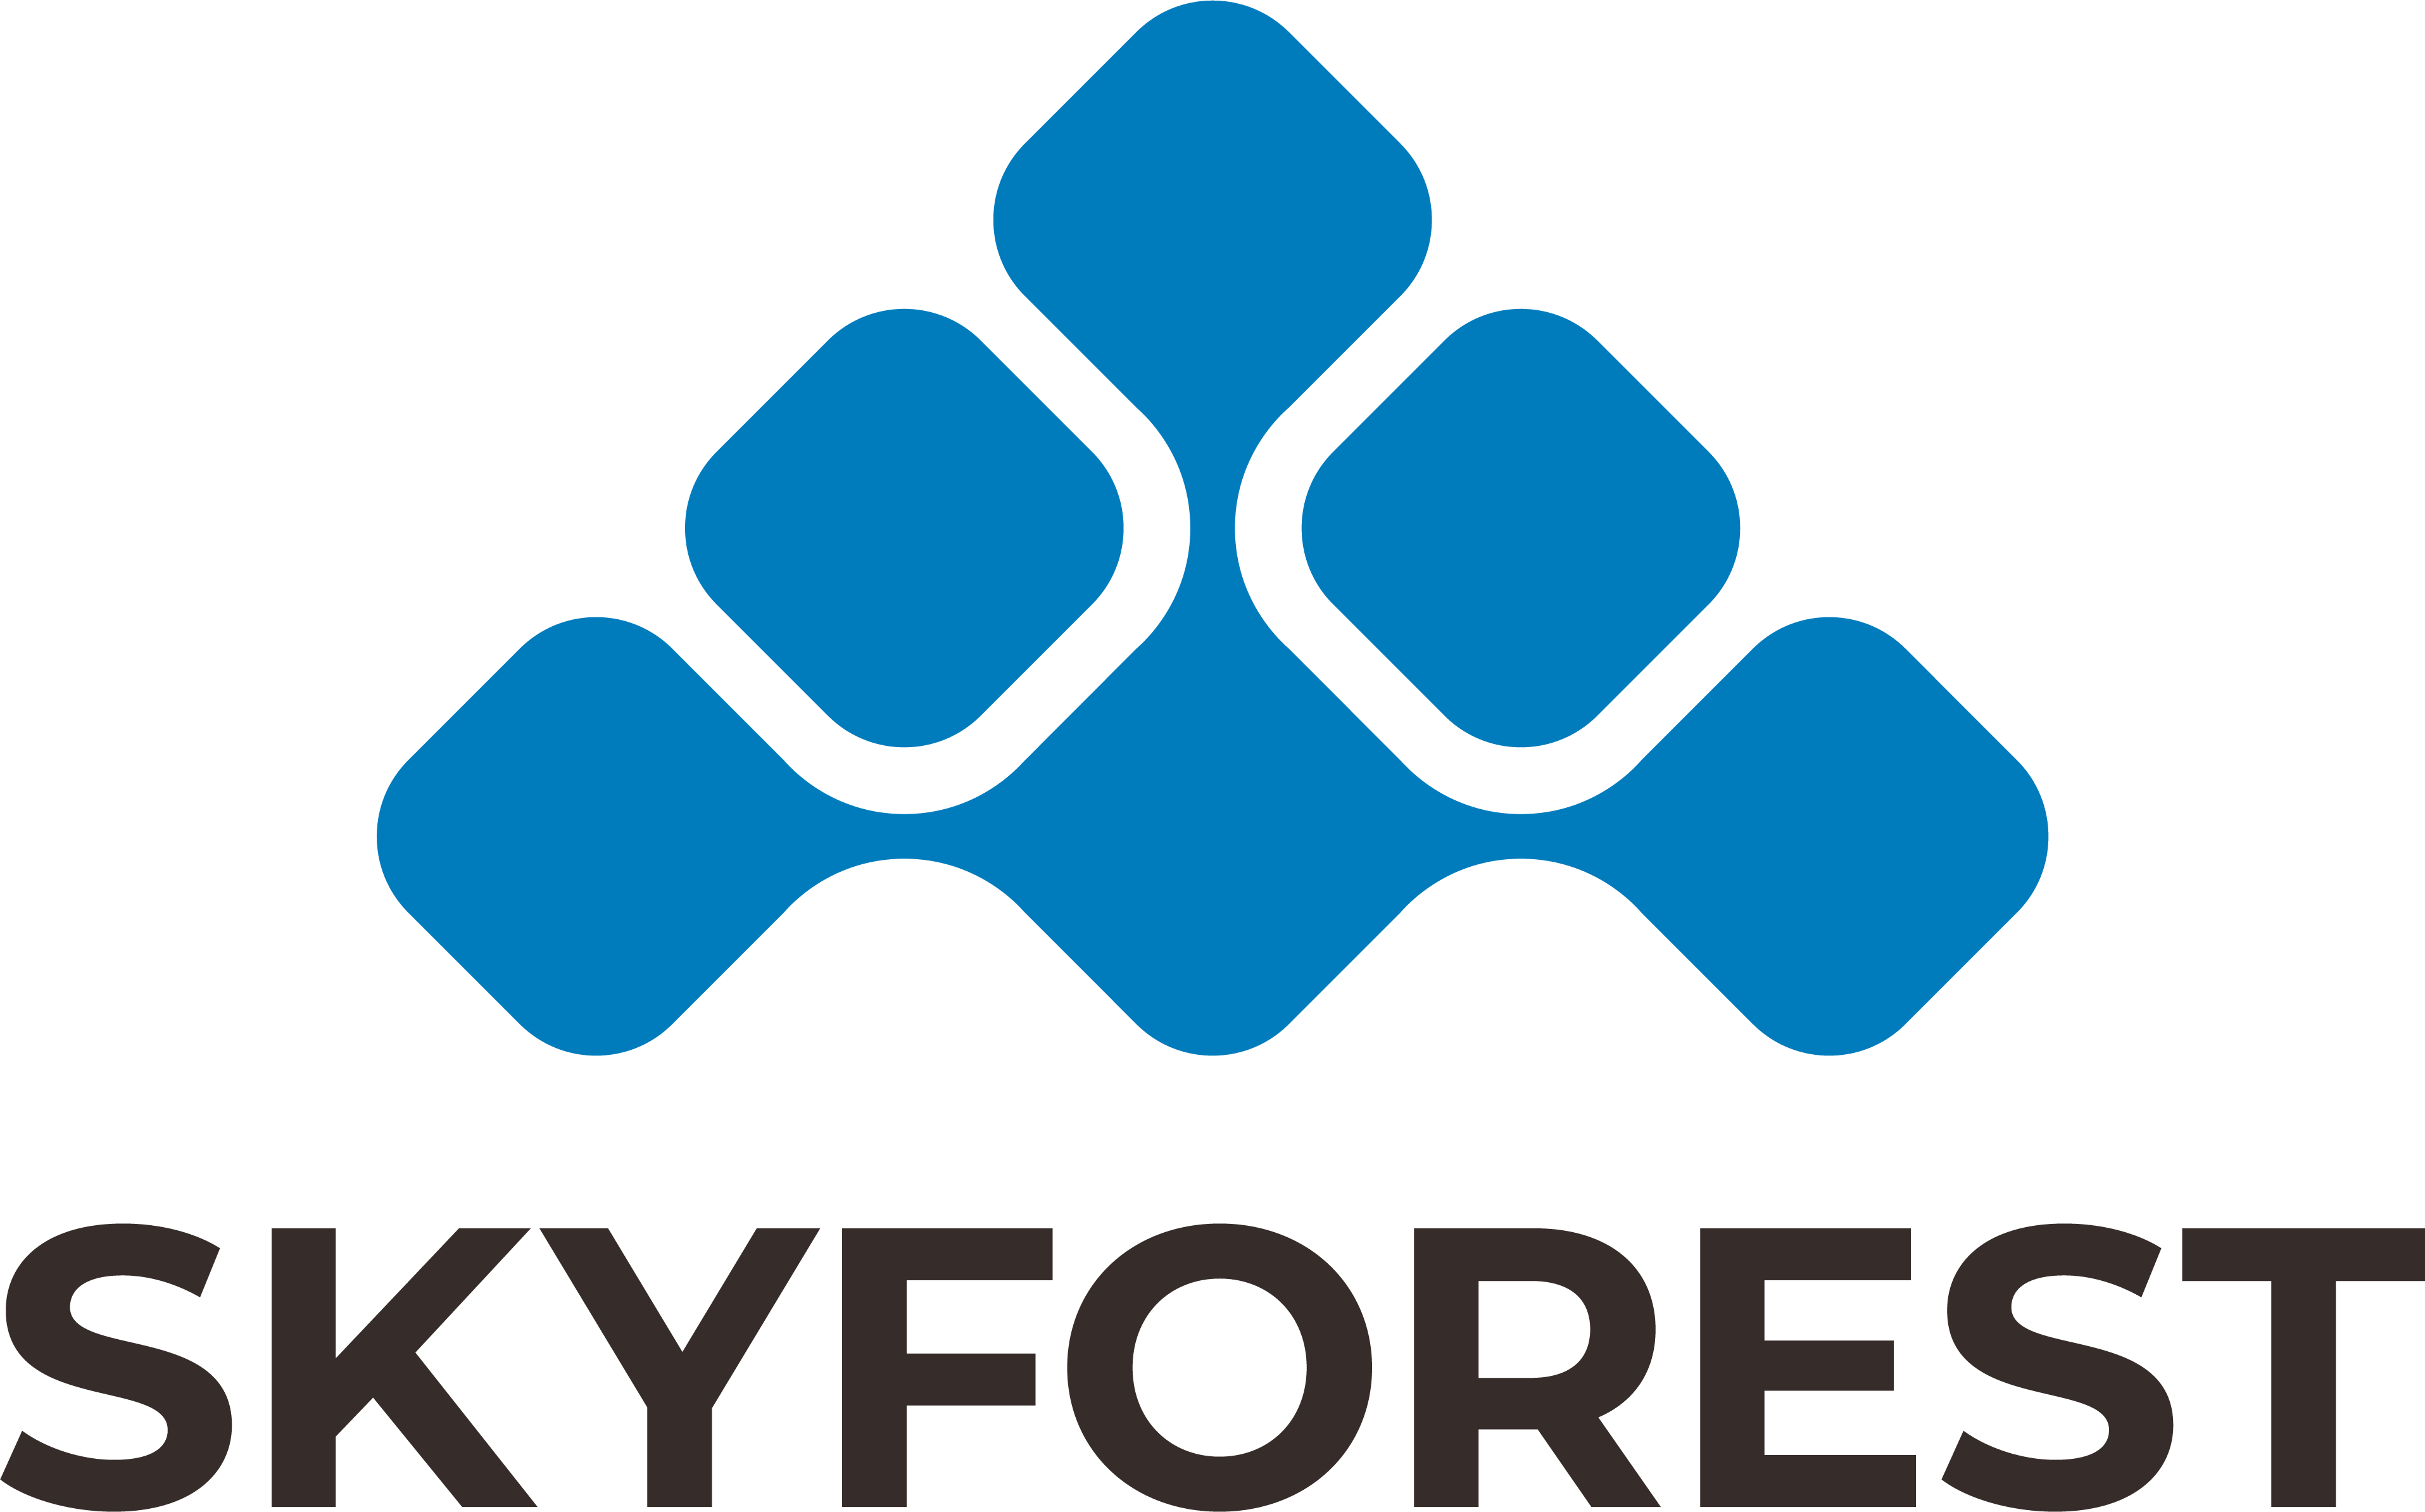 SKYFOREST logo 